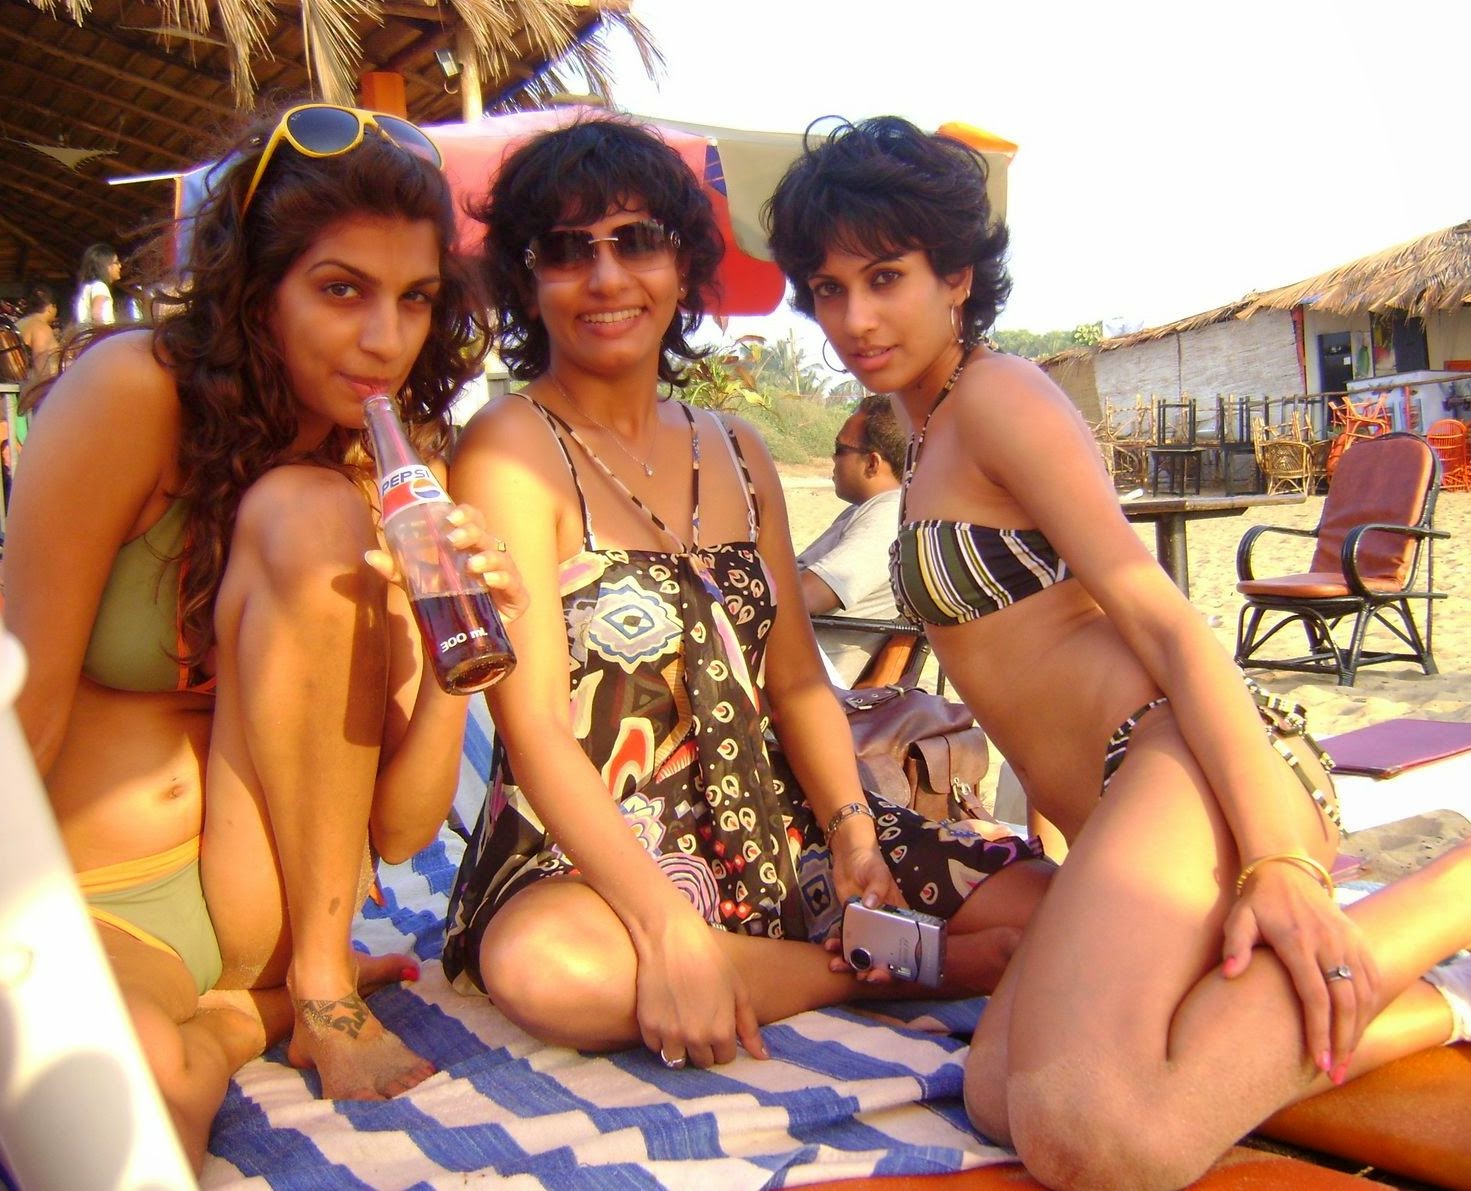 Desi Indian Hot Girls Group In Bikini On Beach Pictures Beautiful Desi Sexy Girls Hot Videos